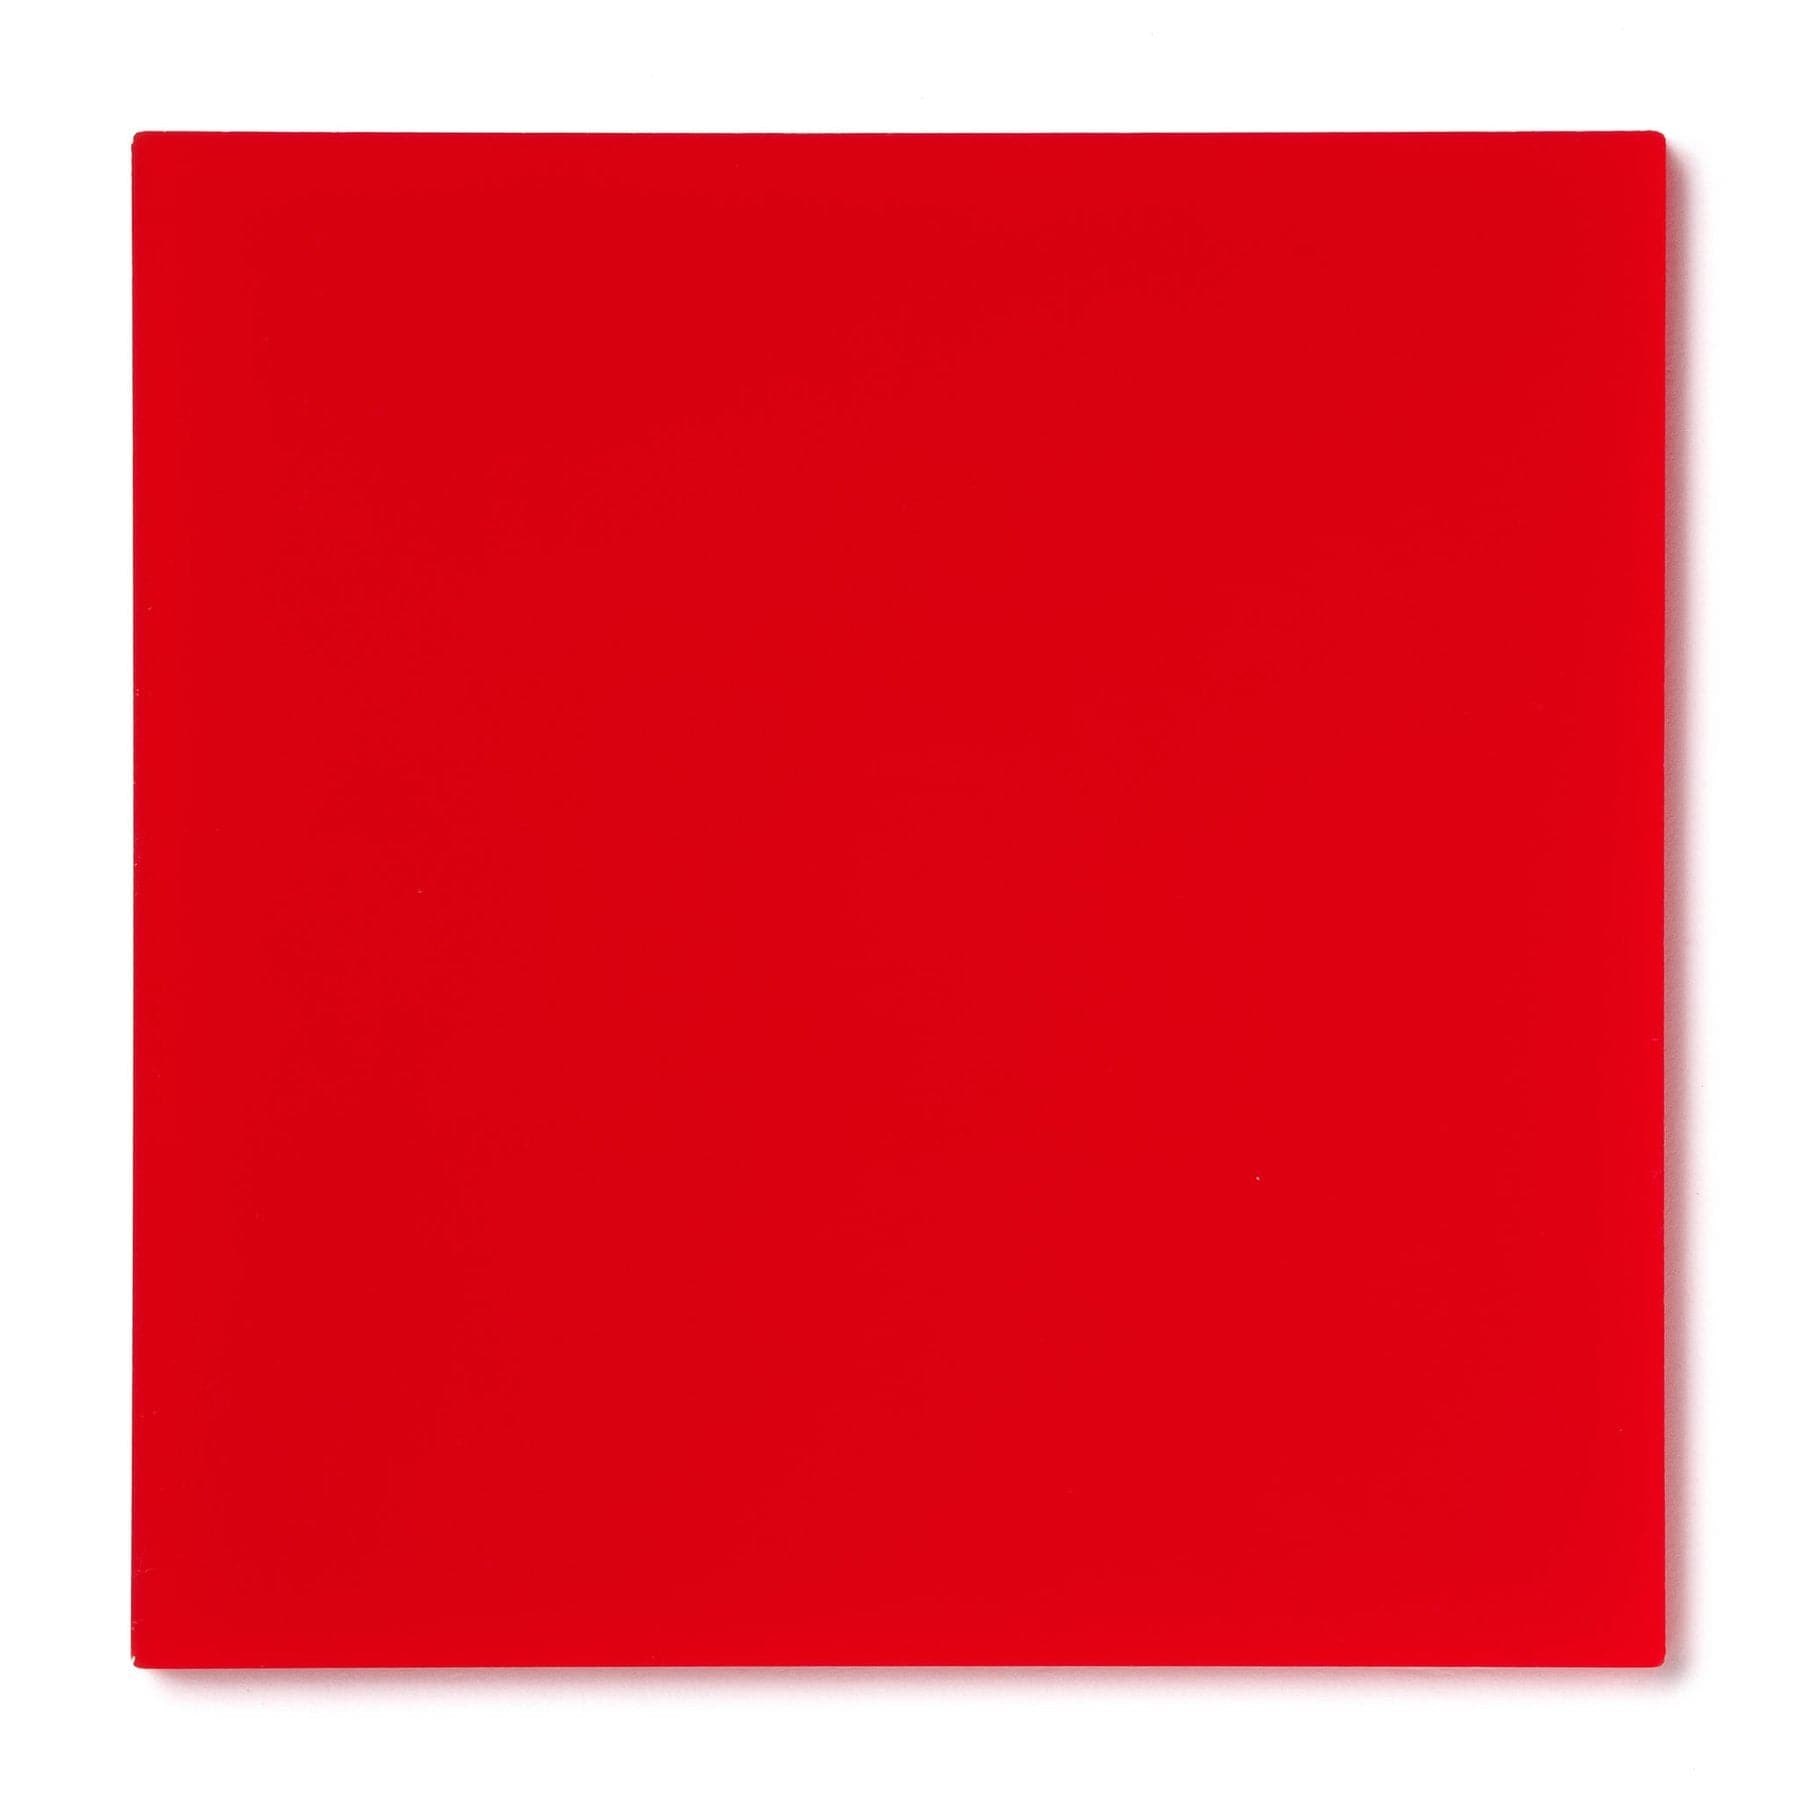 Acrylic Sheet 1/8" Light Red Translucent #2283